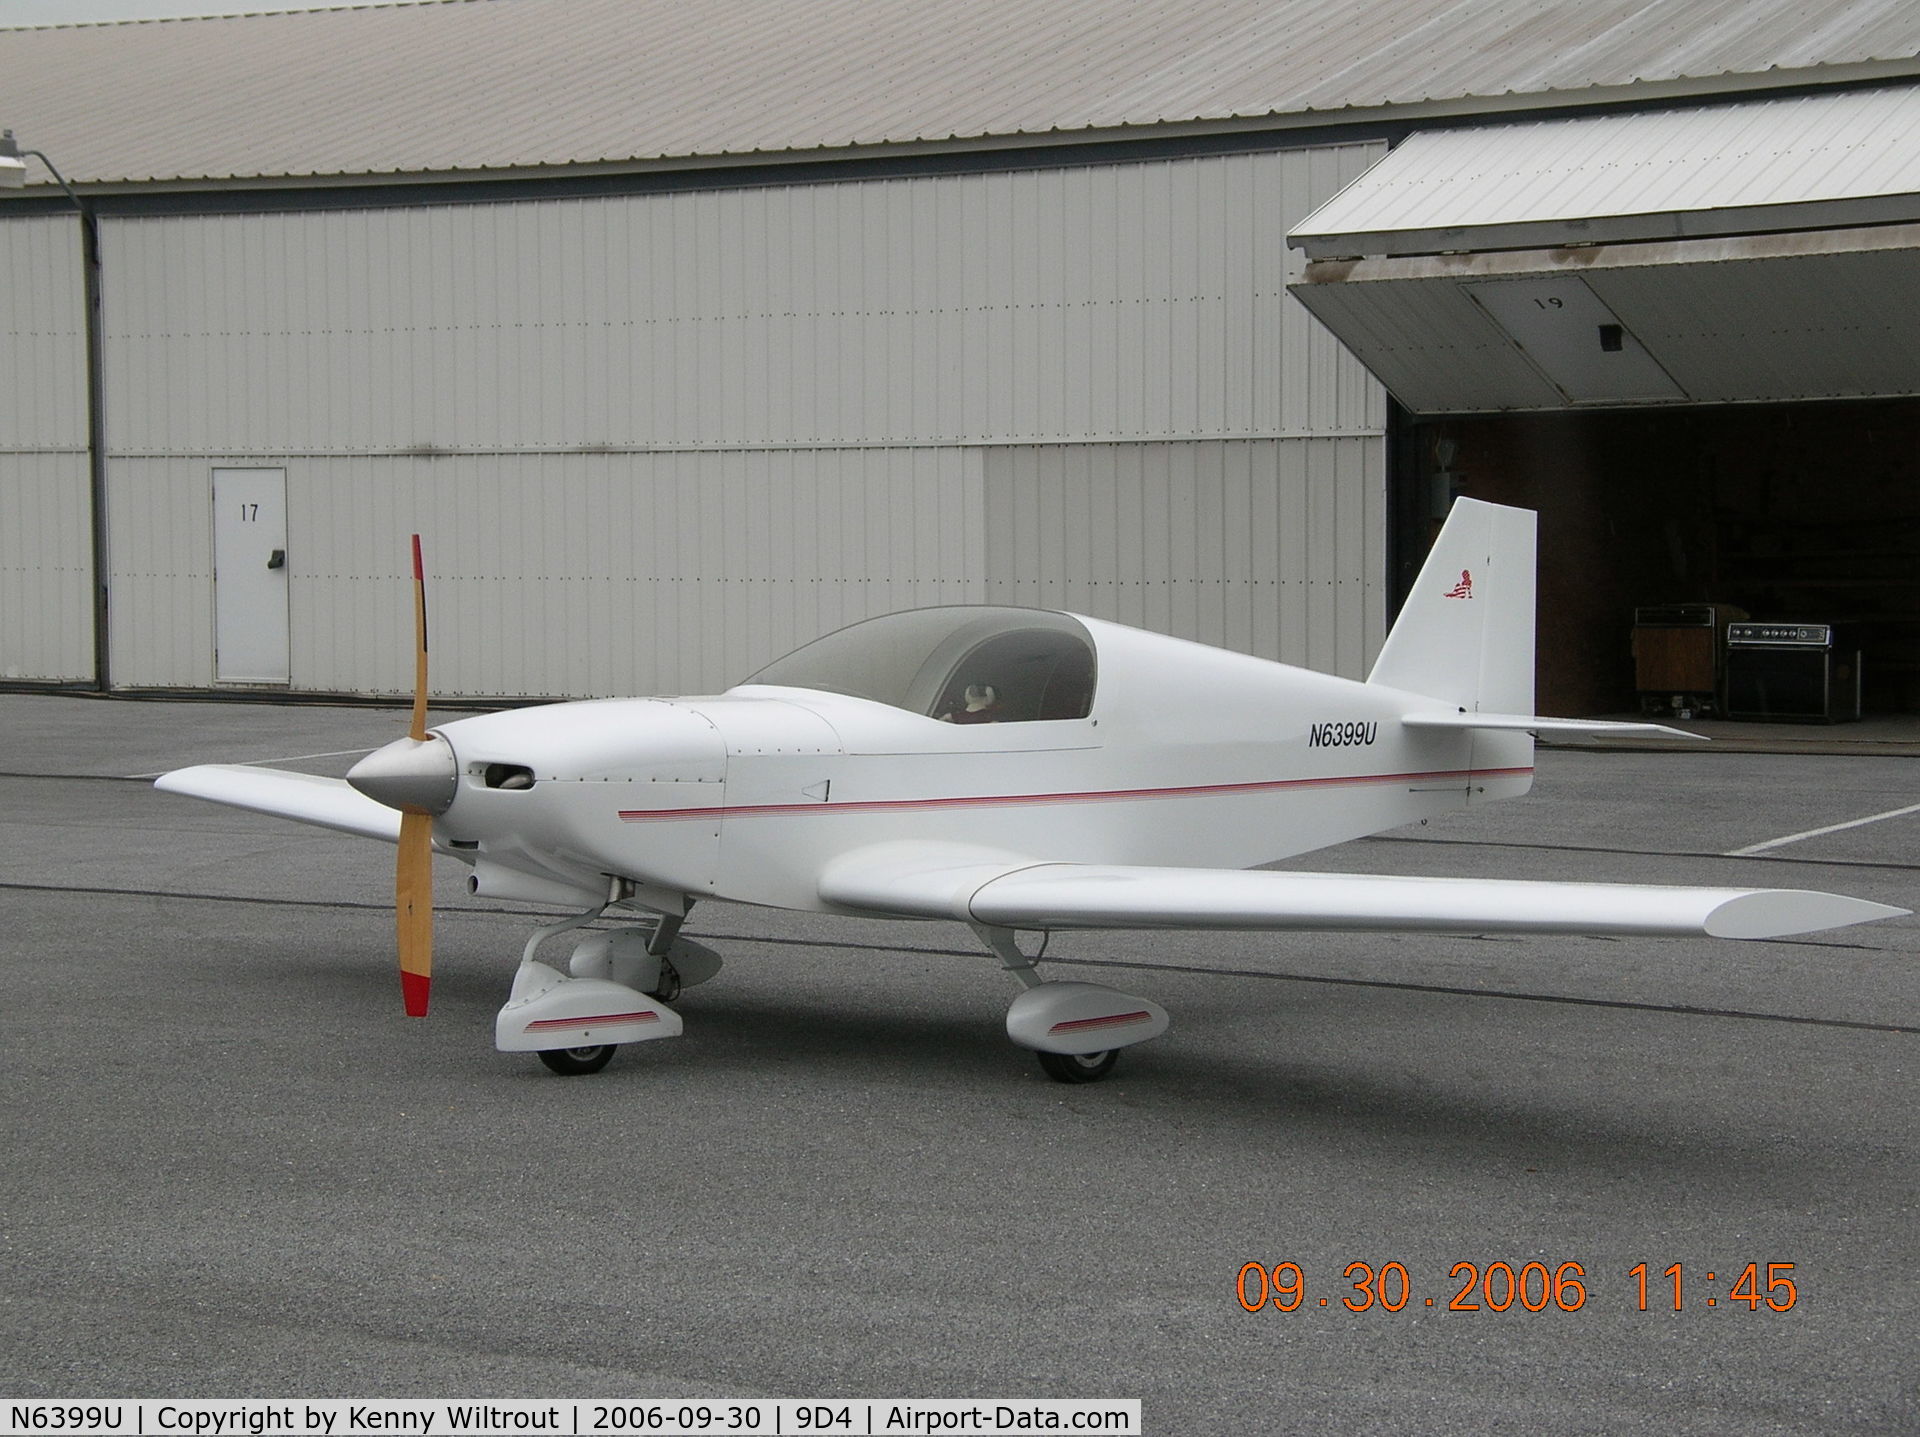 N6399U, 2001 Rand Robinson KR-2S C/N 514, Experimental KR2S